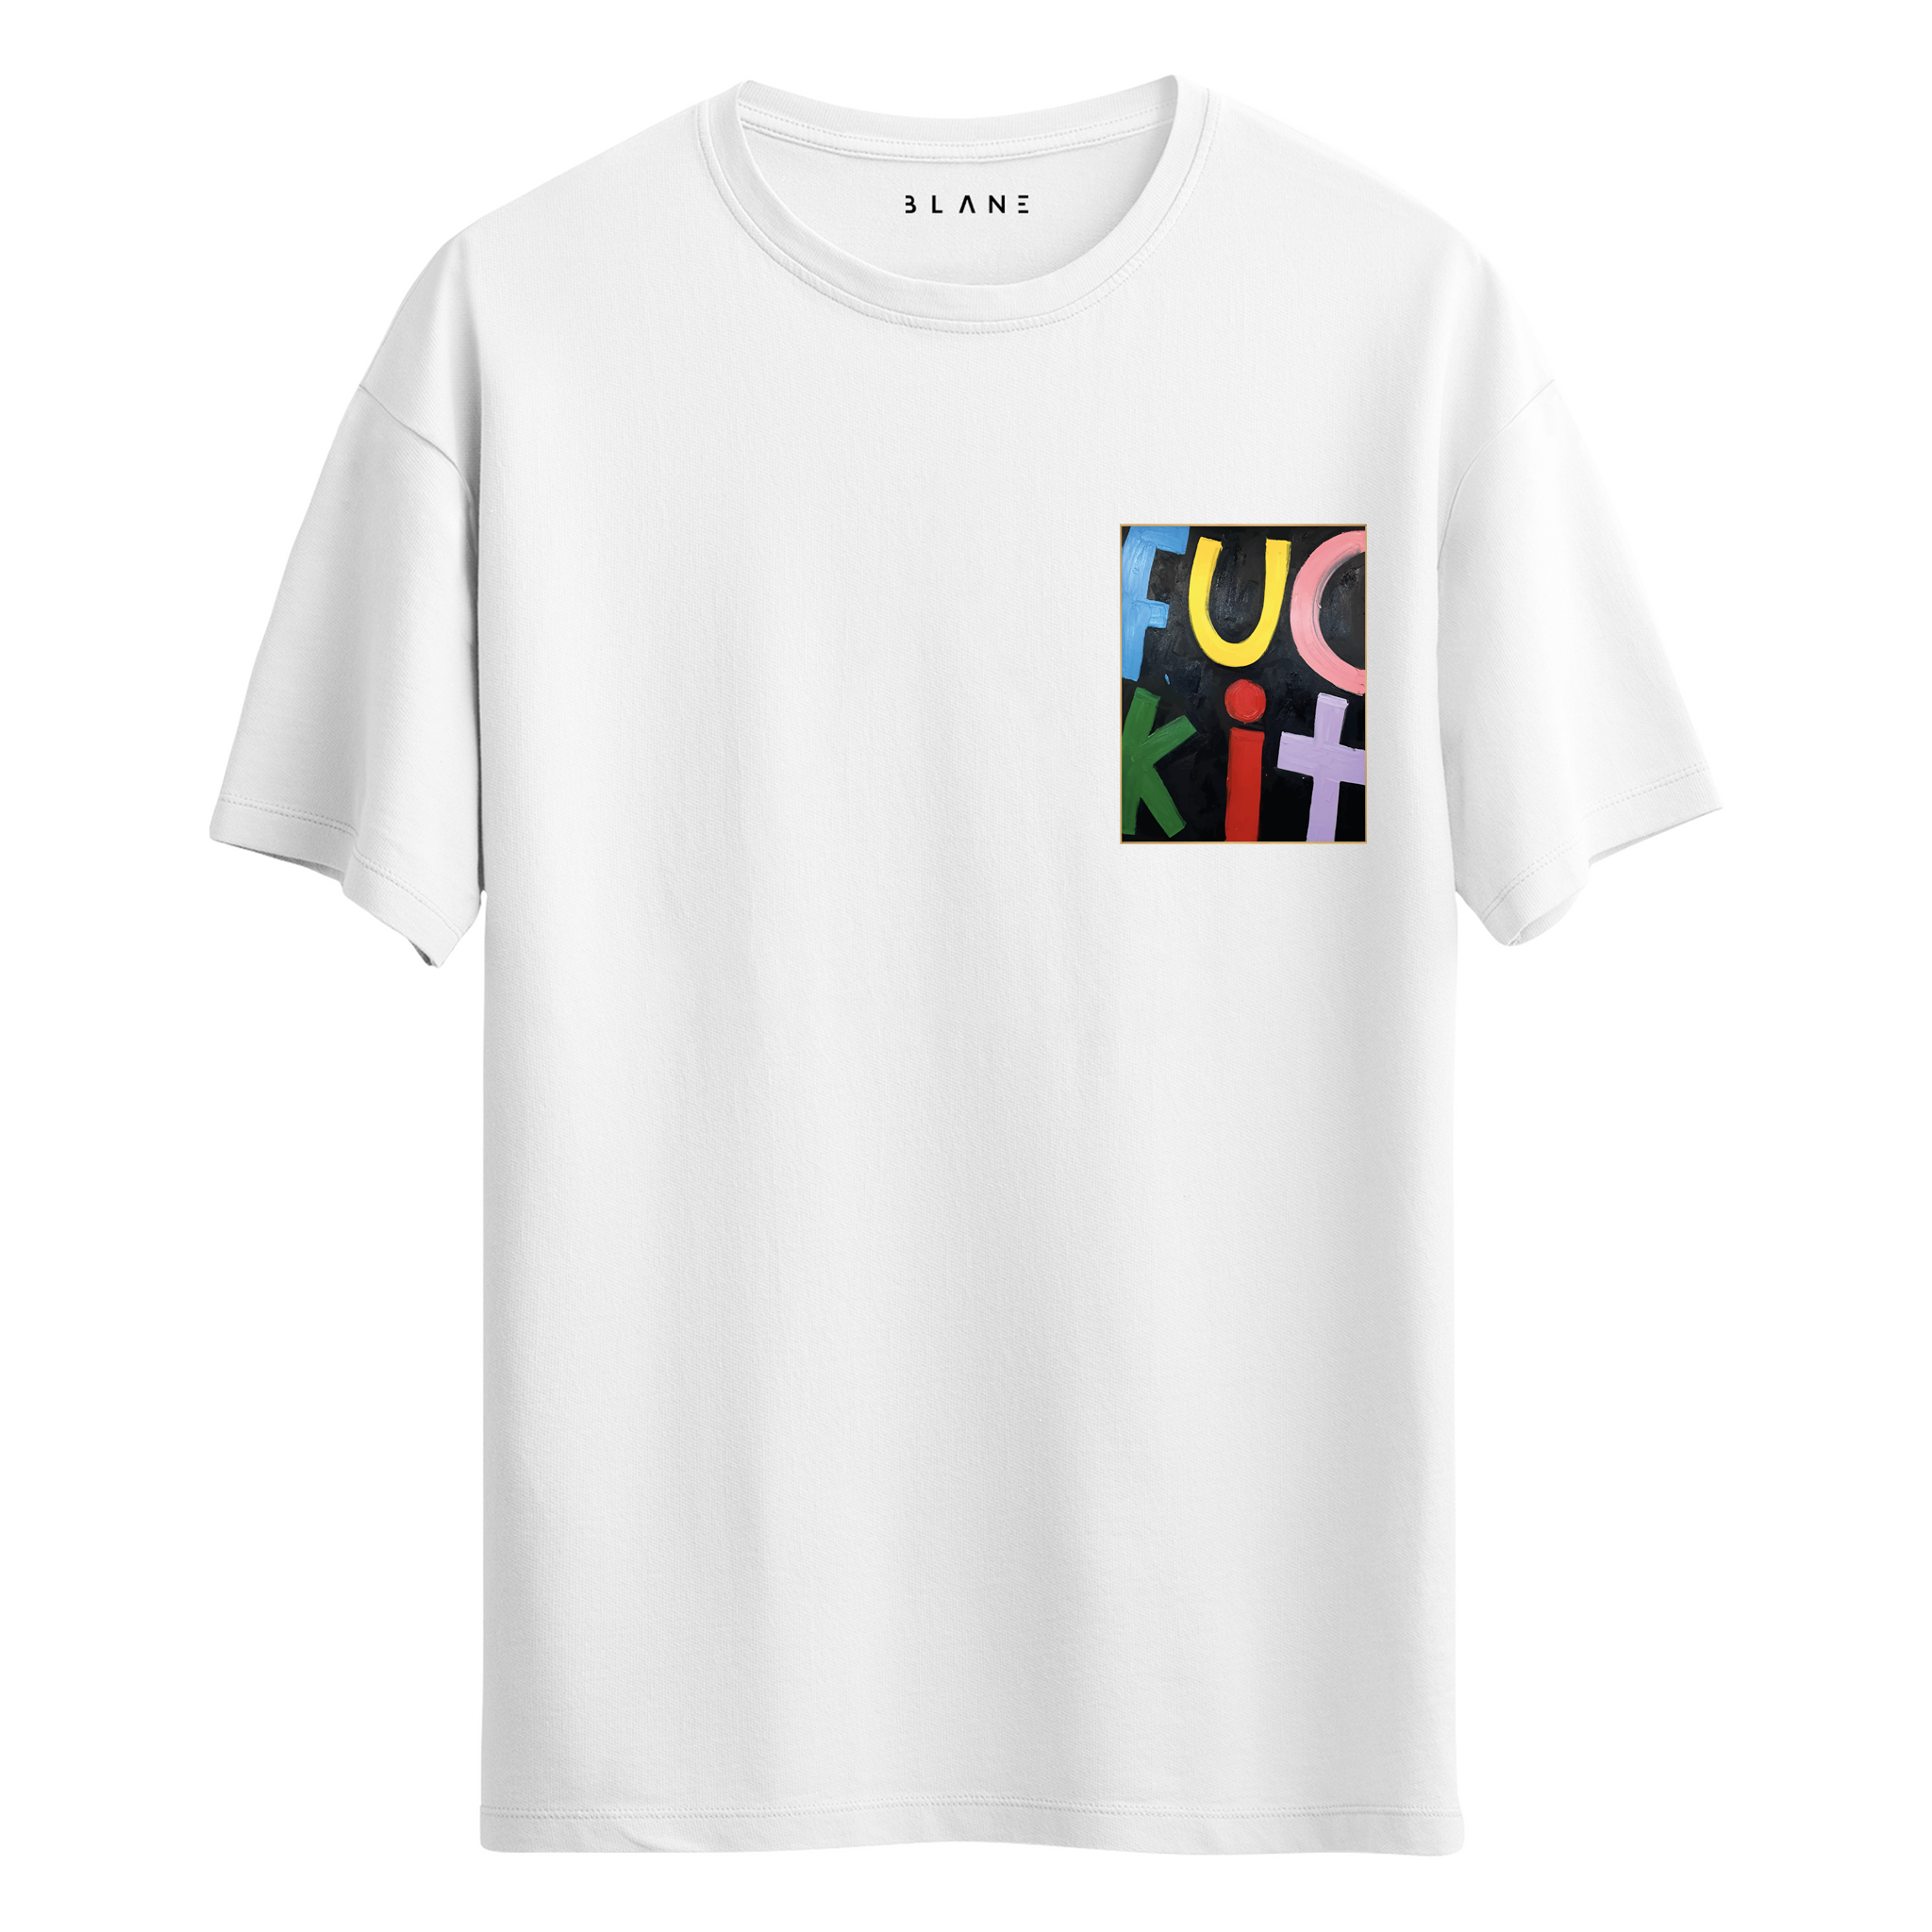 Fuc kit - T-Shirt